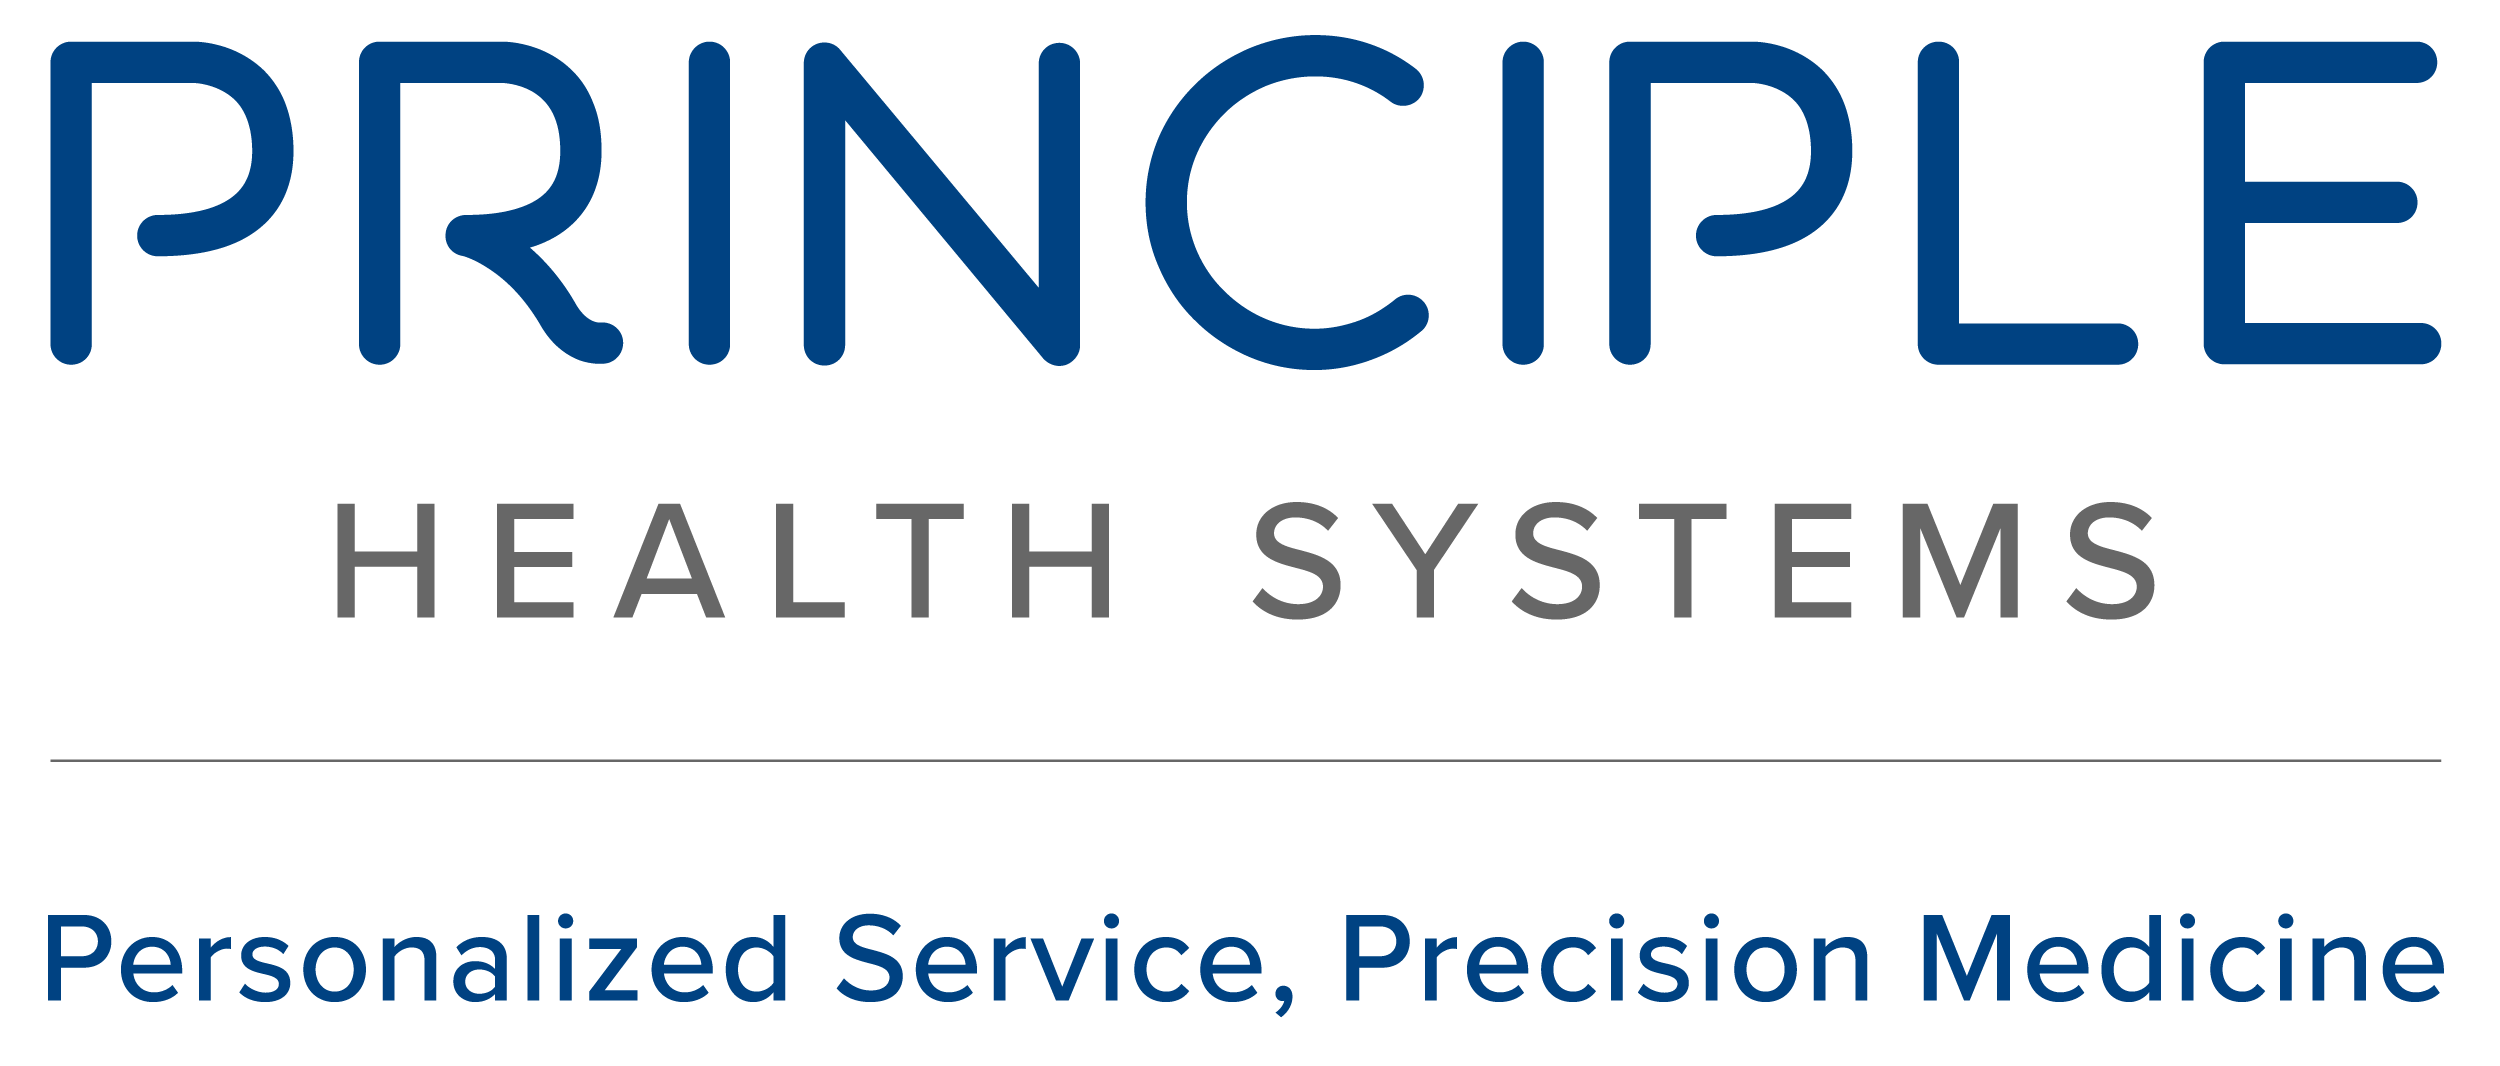 Principle Health Systems logo